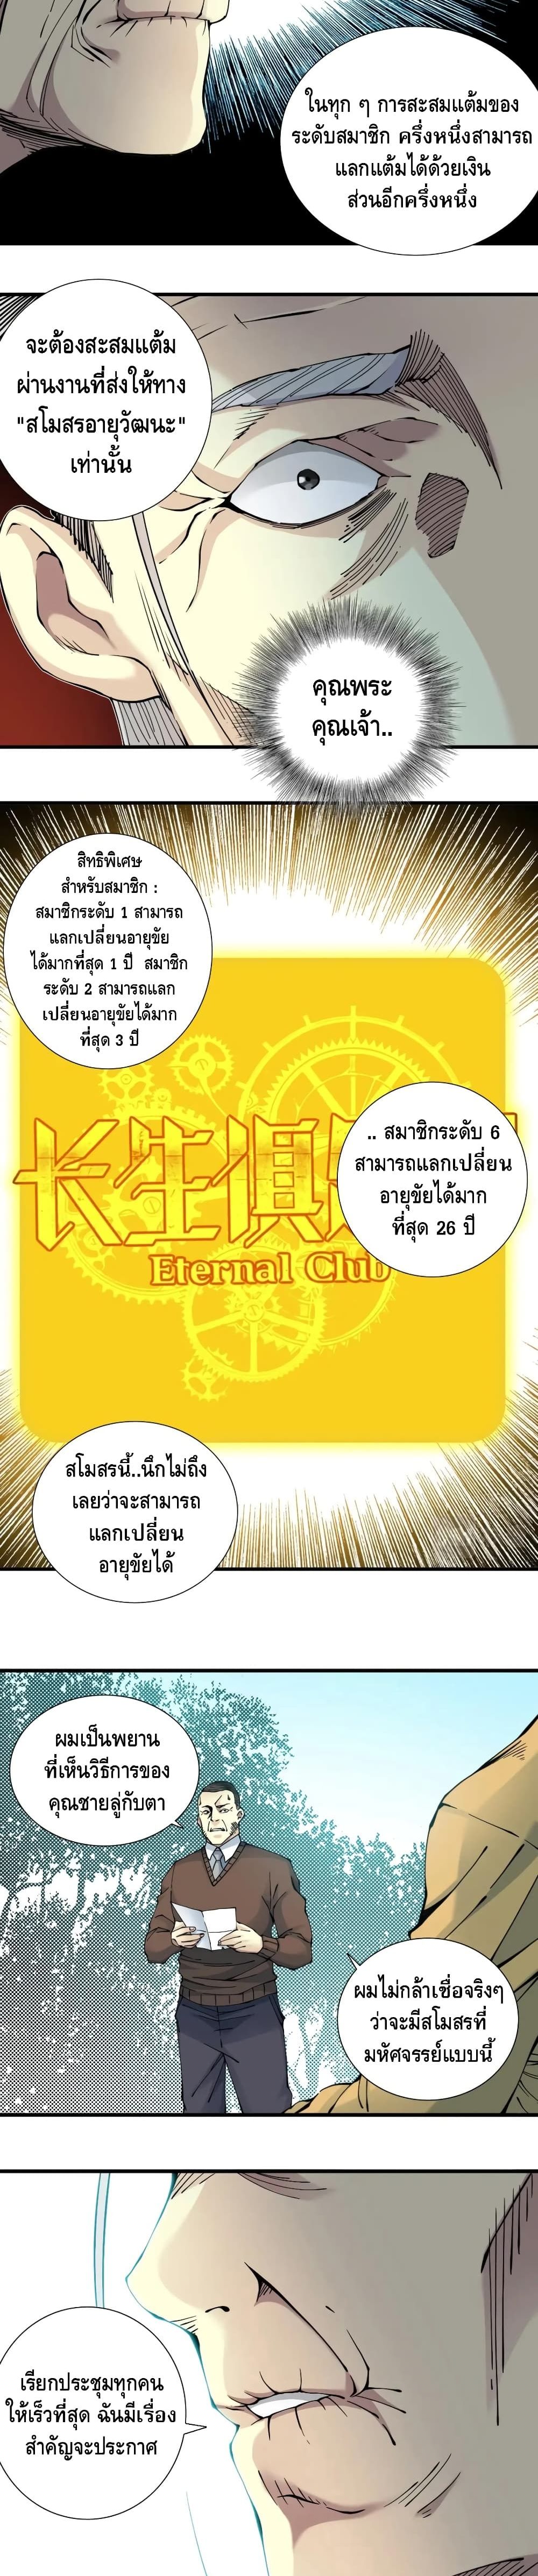 The Eternal Club 12 08